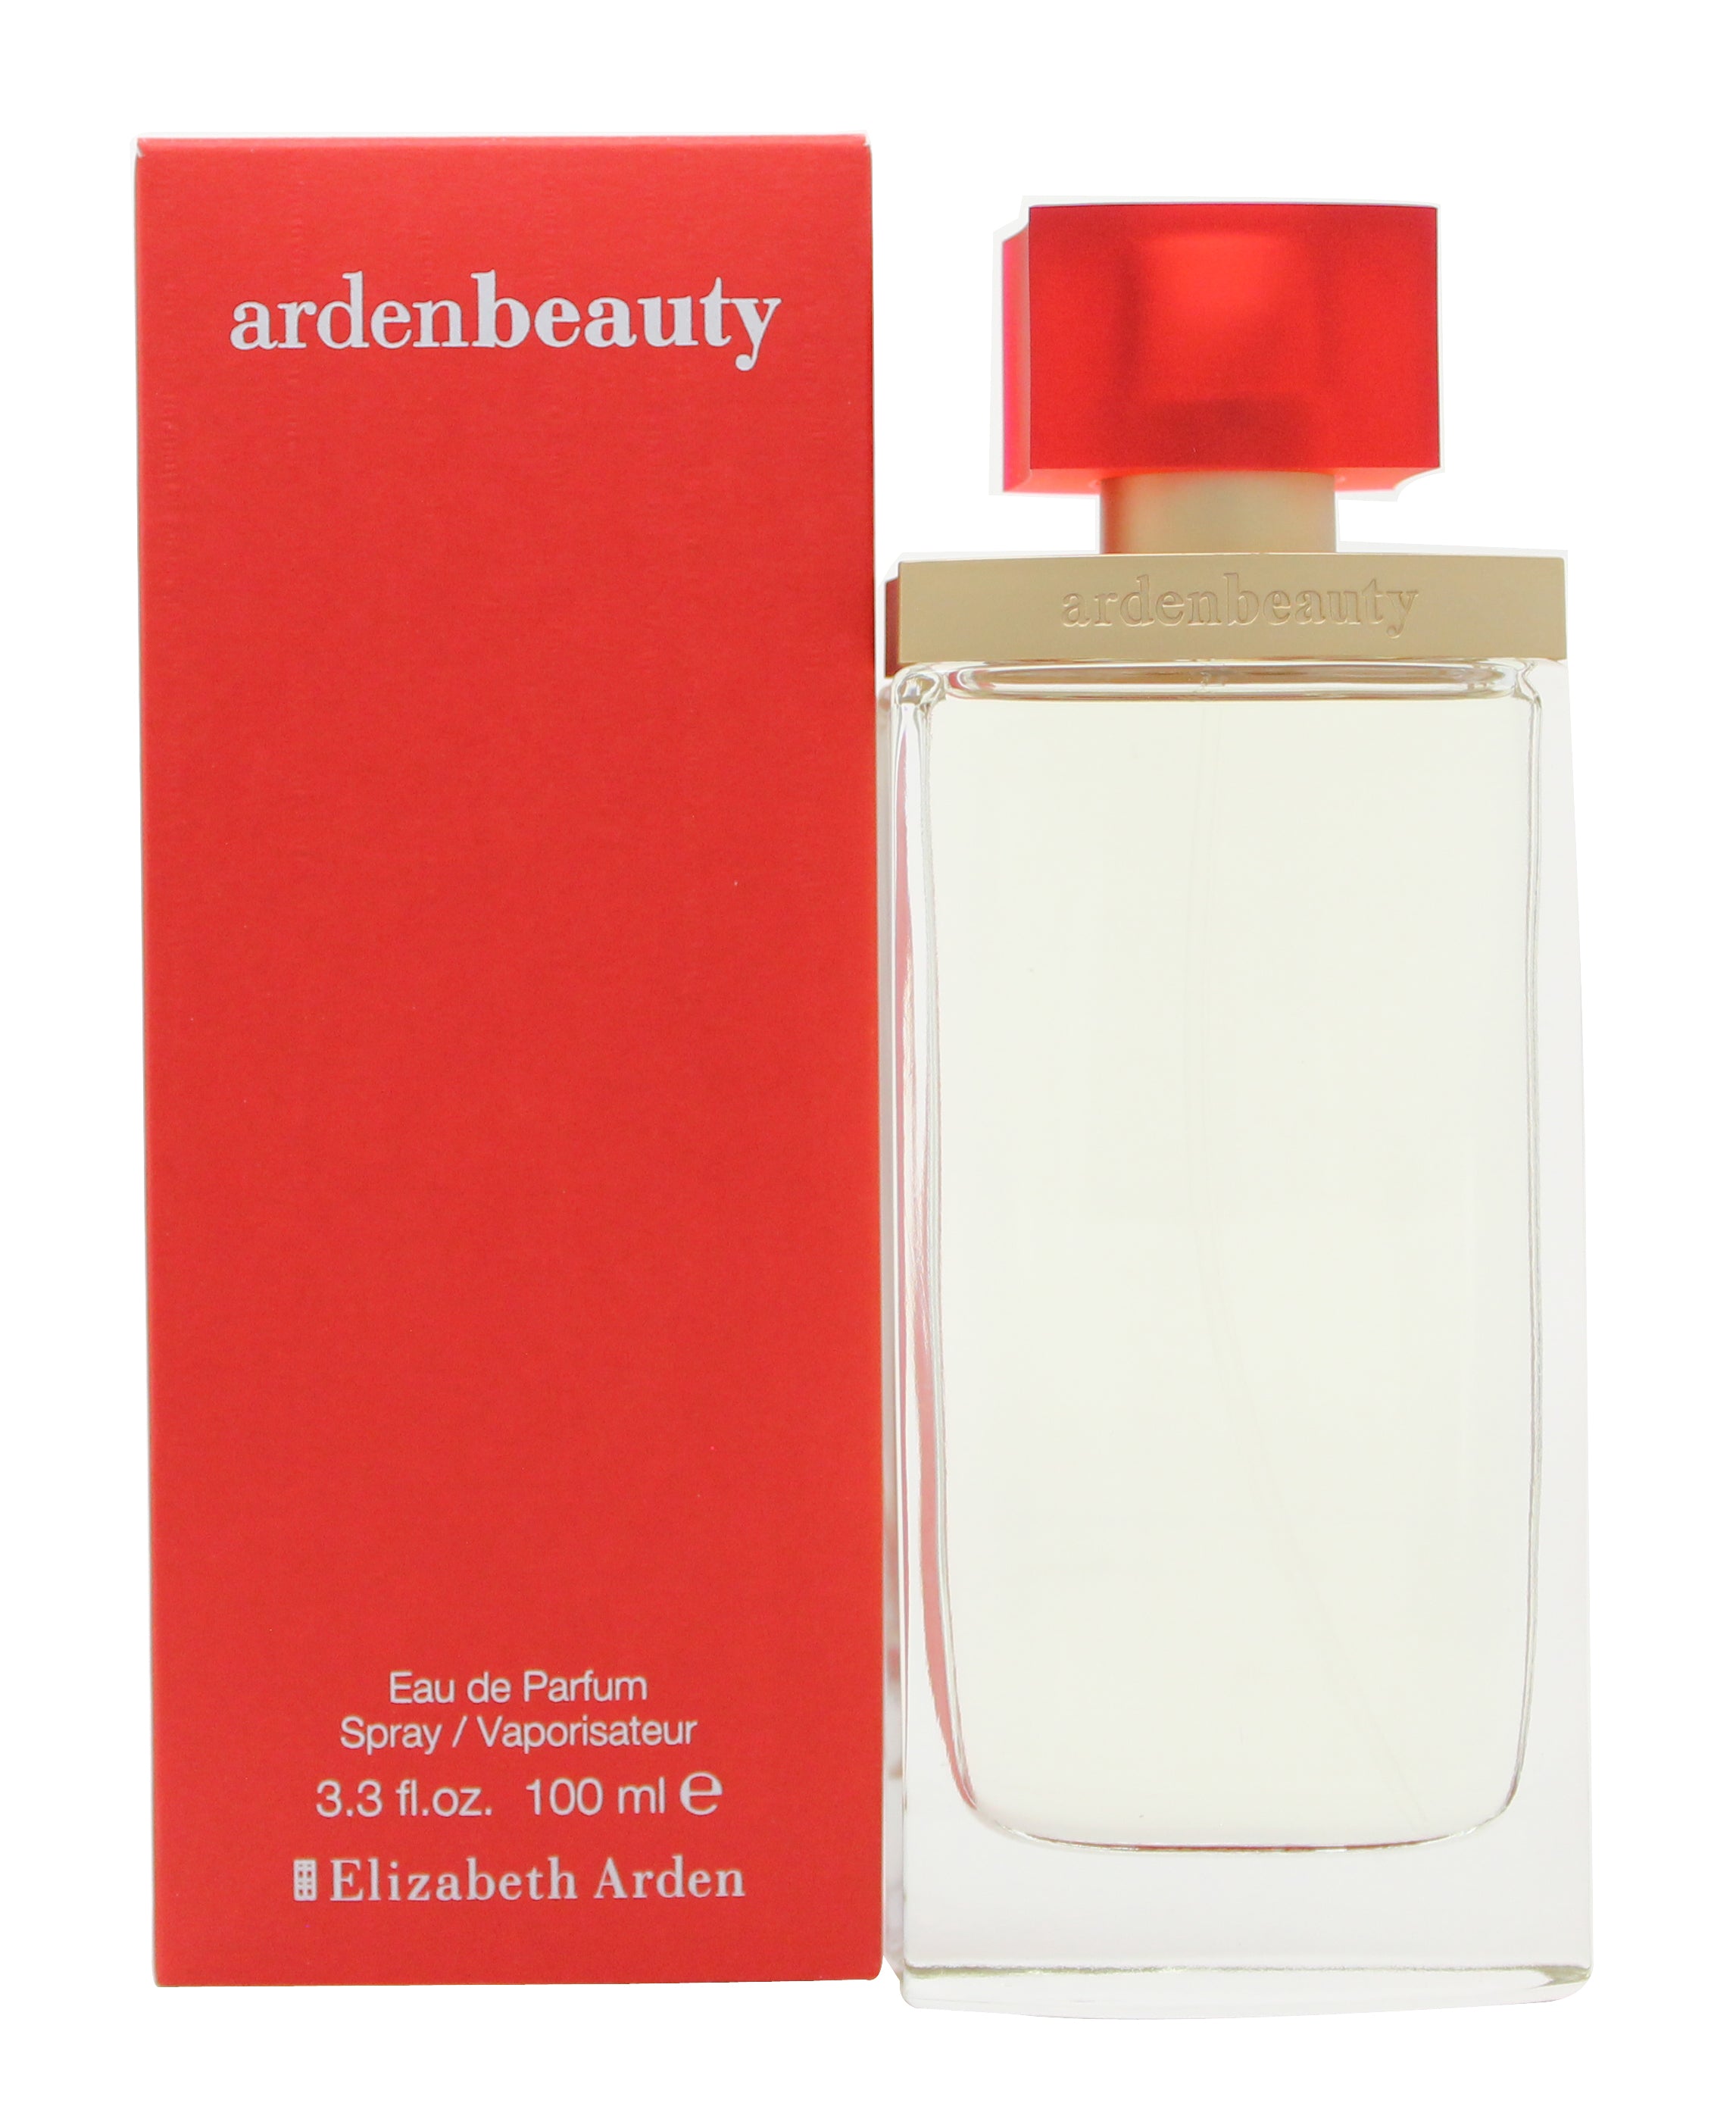 View Elizabeth Arden Beauty Eau de Parfum 100ml Spray information